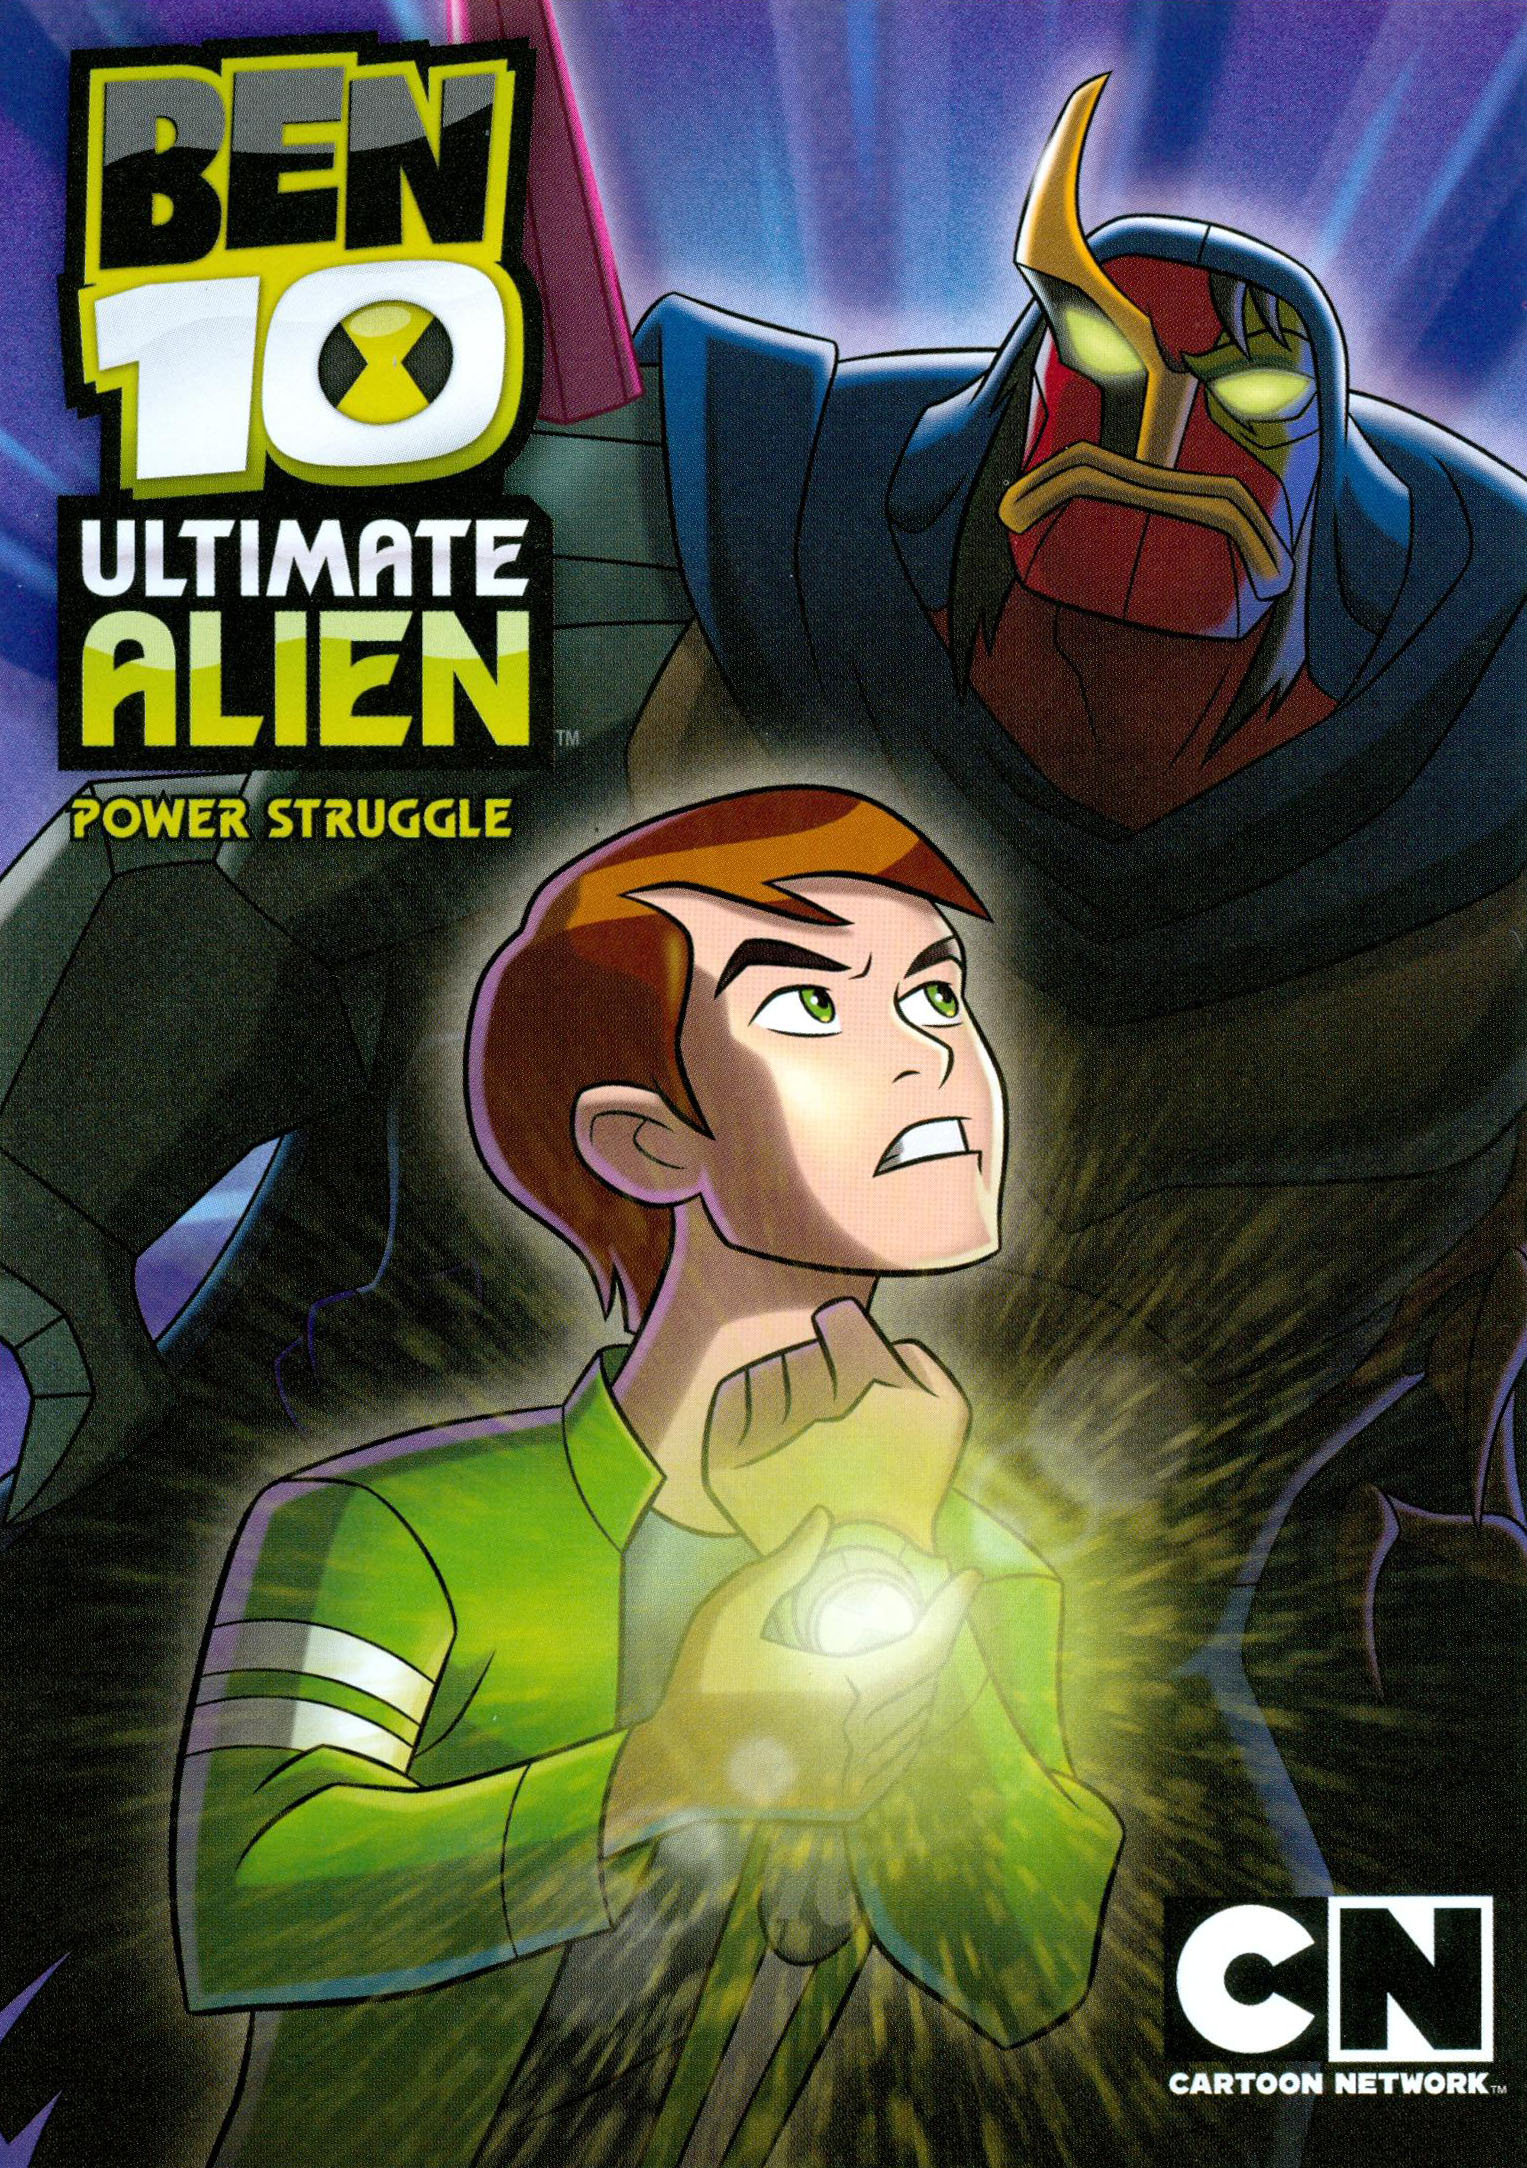 Ben 10: Alien Swarm Blu-ray